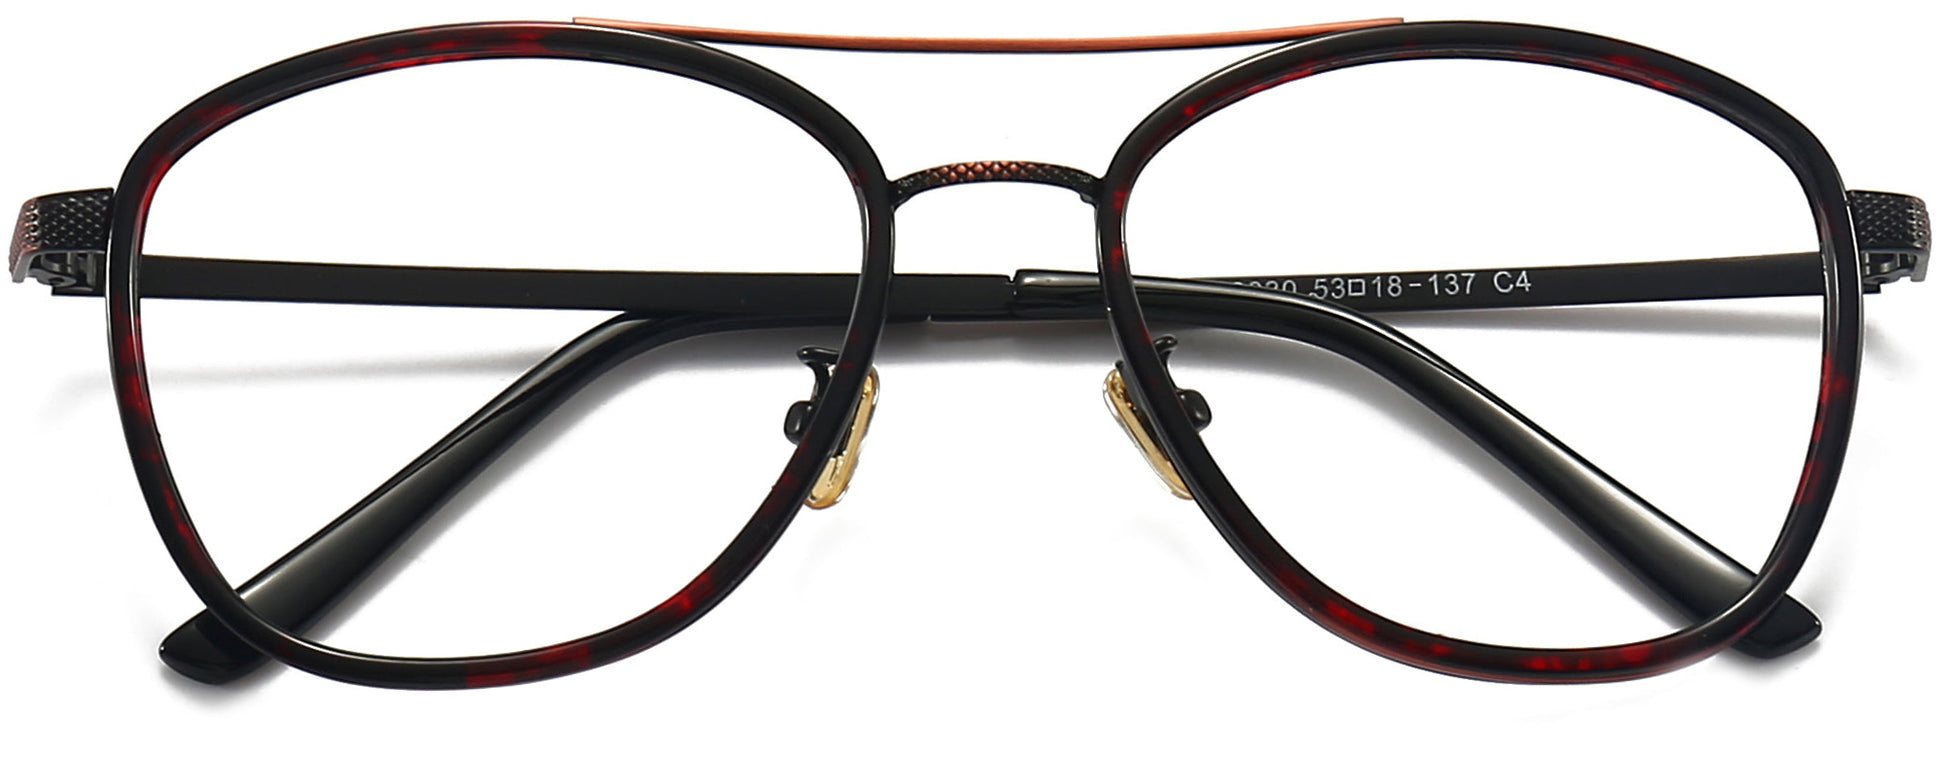 Jaime Aviator Tortoise Eyeglasses from ANRRI, closed view